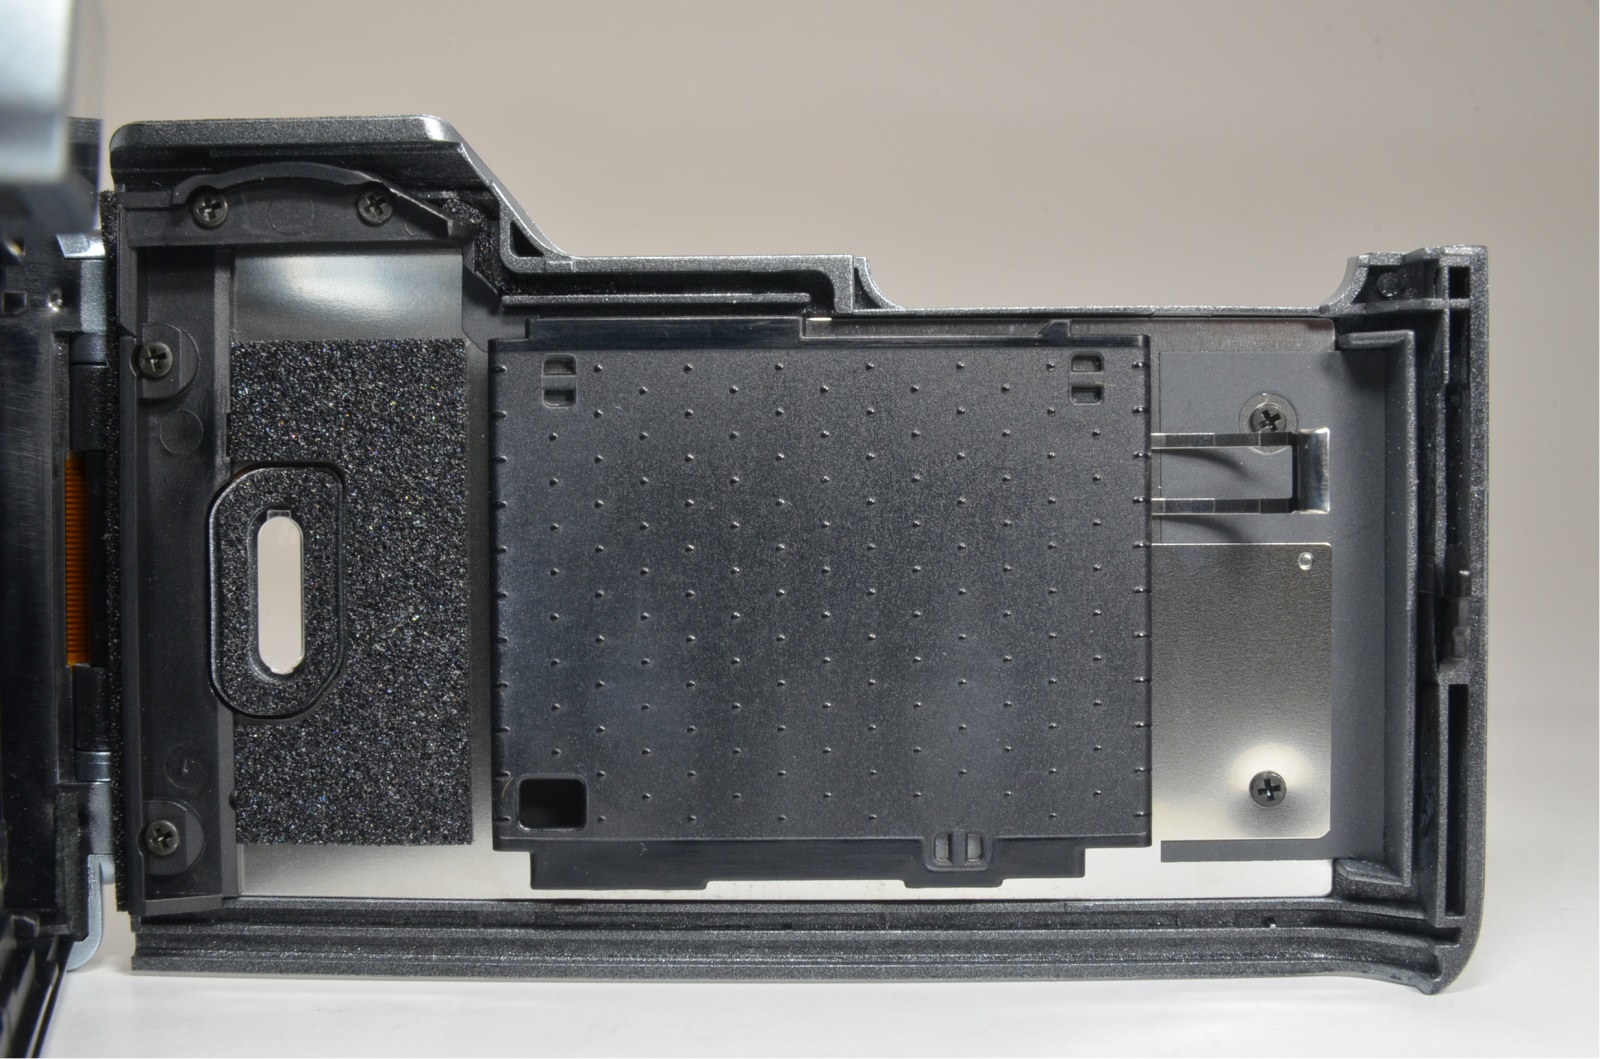 fujifilm natura s aqua film camera fujinon 24mm f1.9 near mint shooting tested